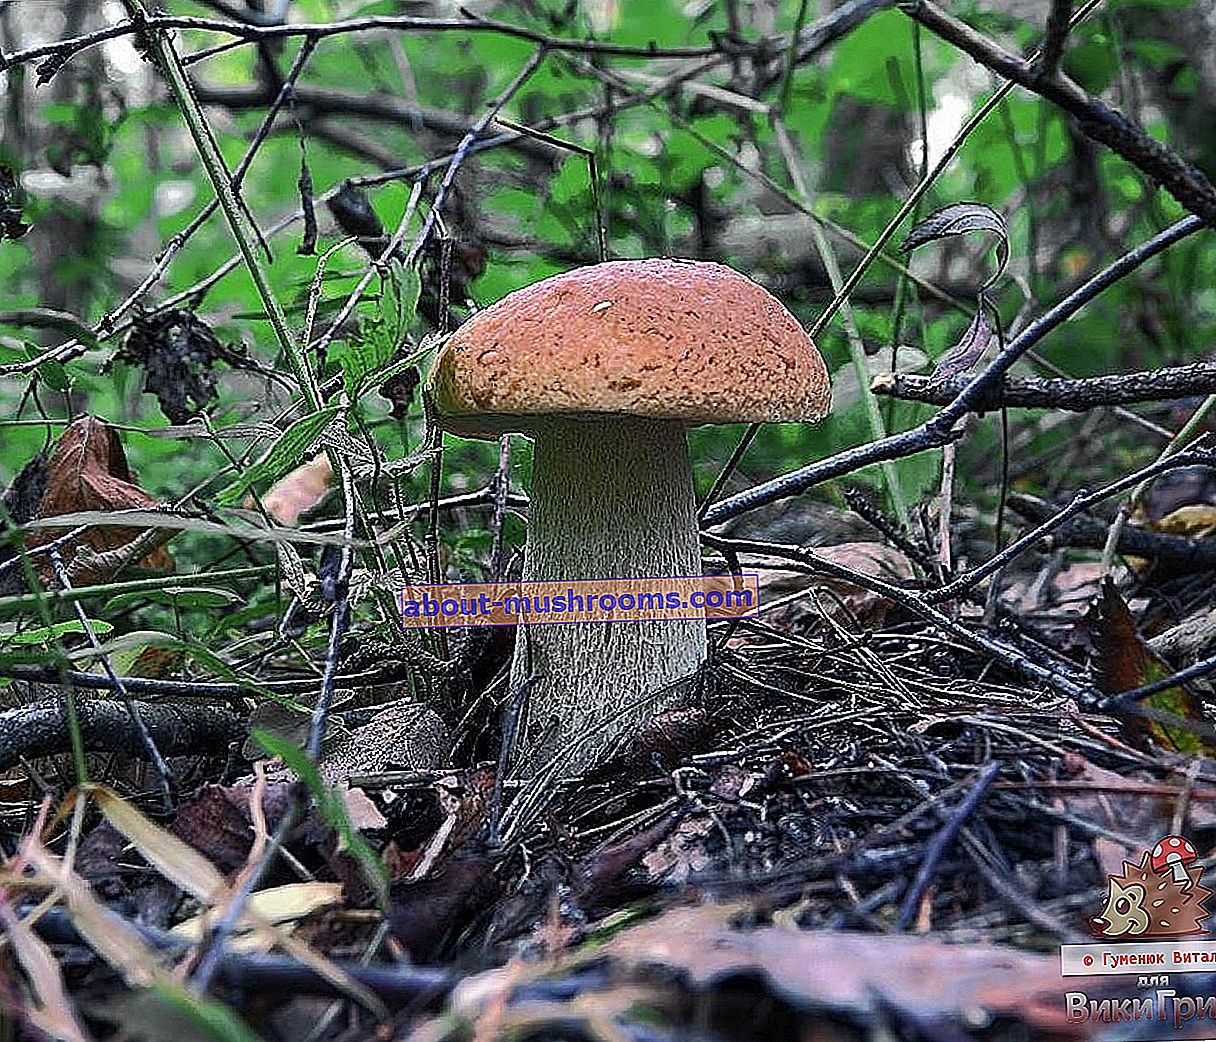 Boletus edulis - White mushroom